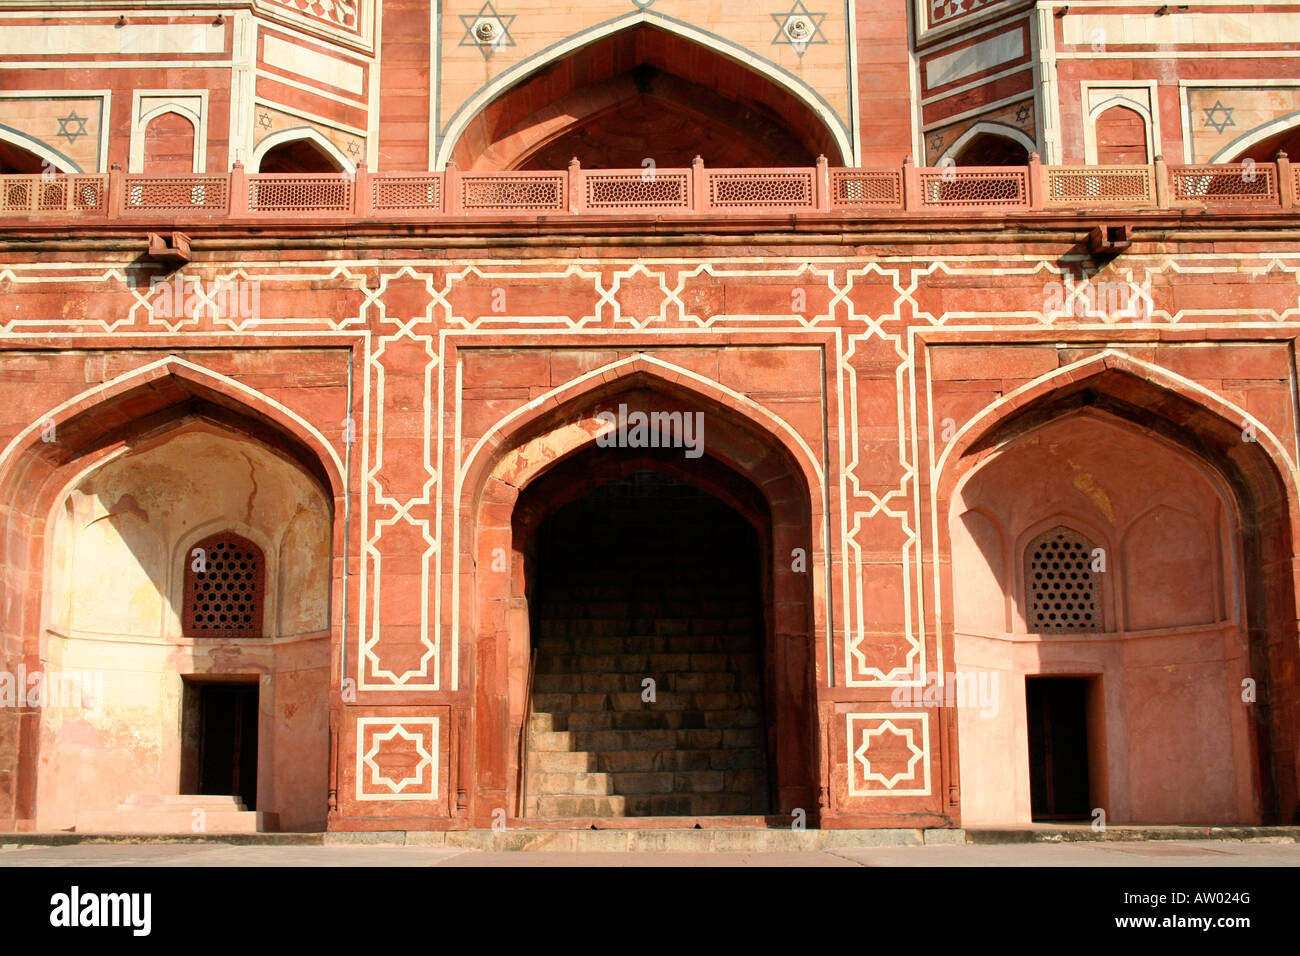 Doorway to Humayun's tomb in New Delhi - historical heritage monument Stock Photo